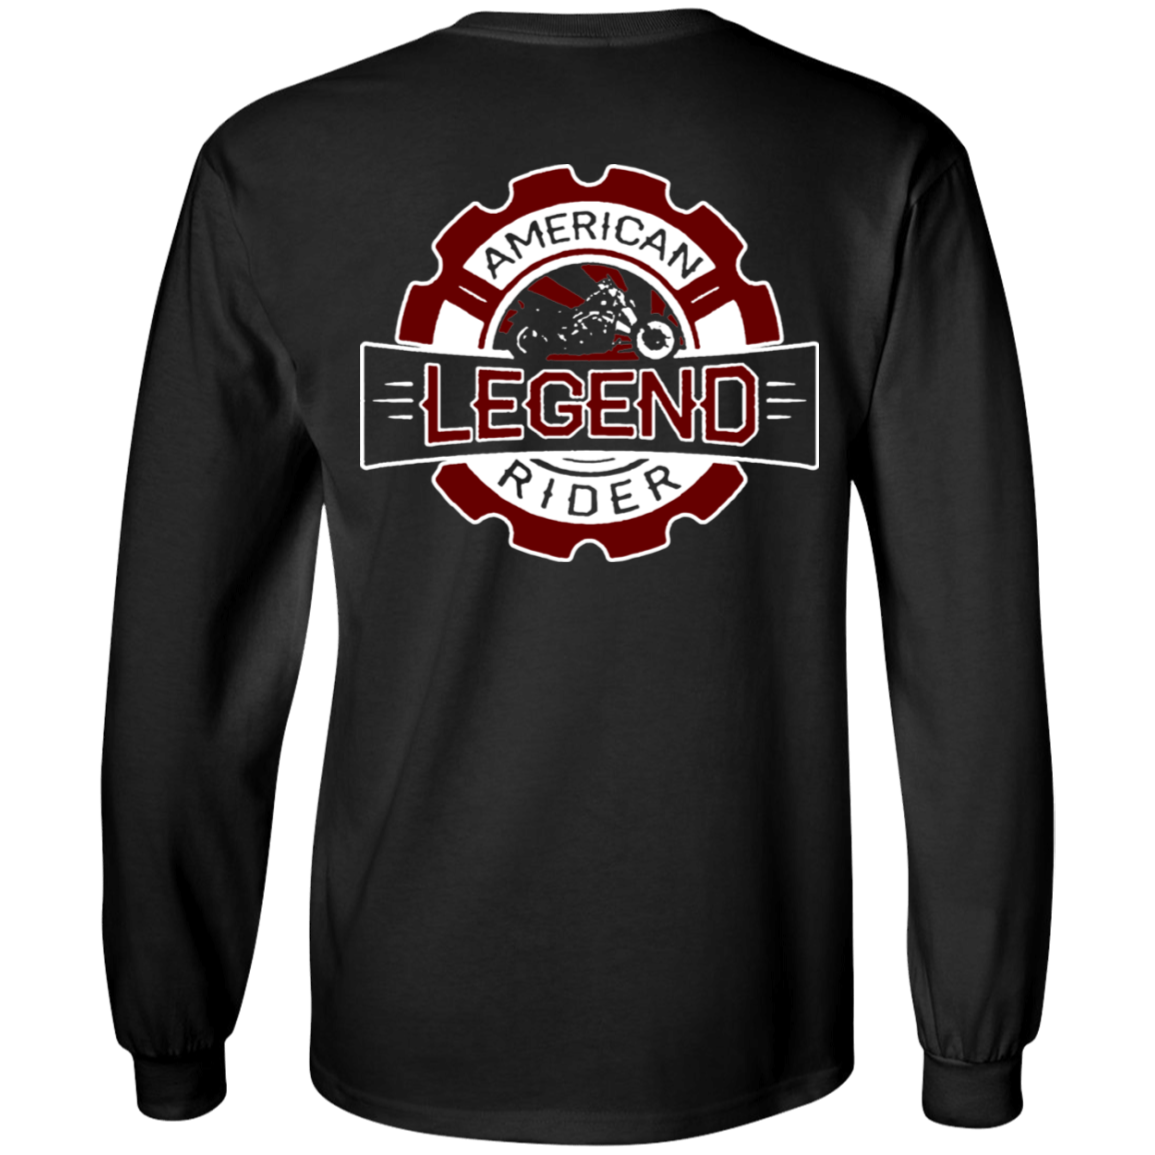 American Legend Rider Official T-shirt - American Legend Rider